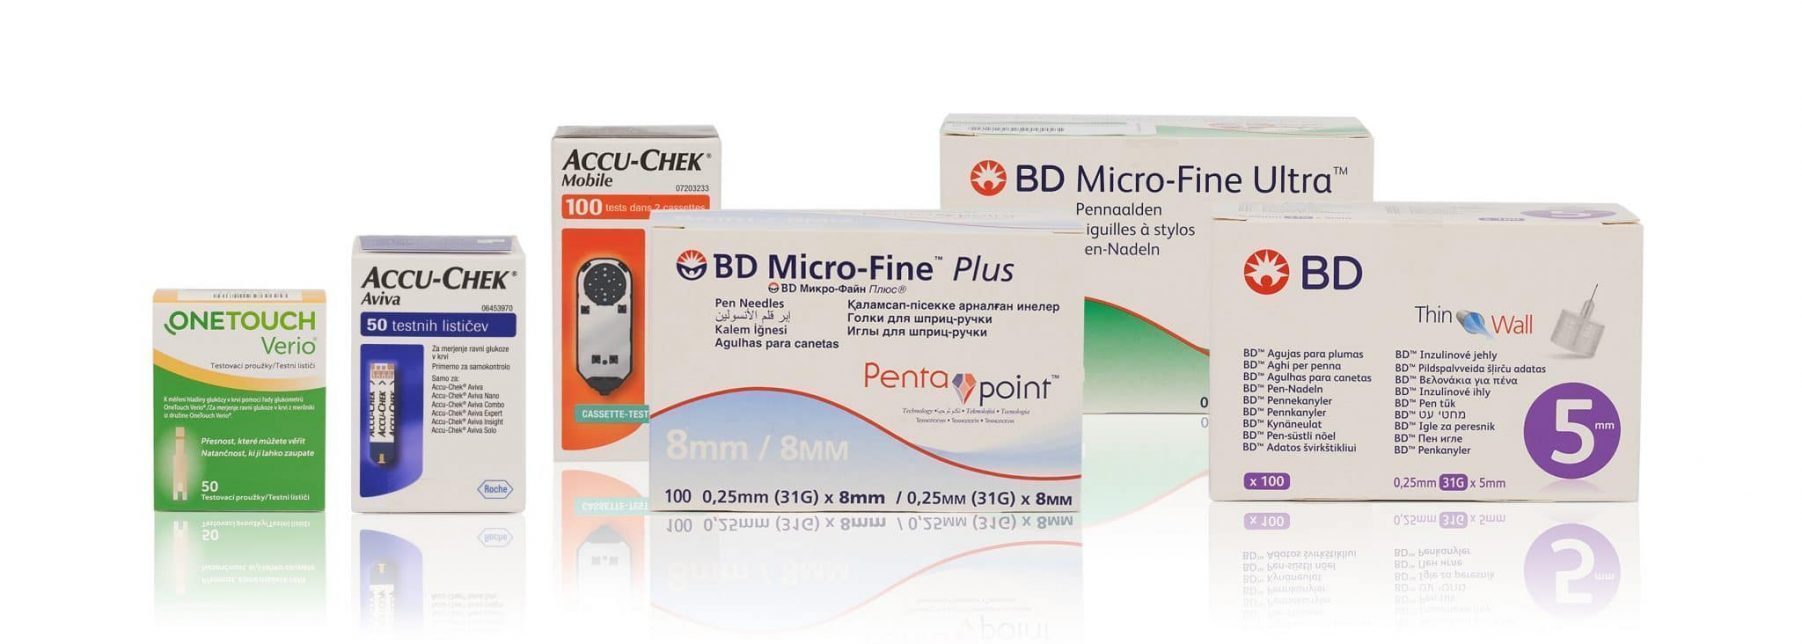 Import Diabetes Produkte - Pen Nadeln BD Micro-Fine, Thin Wall - Teststreifen OneTouch Verio, Roche Accu-Chek, Blutzucker Messgerät Mobile